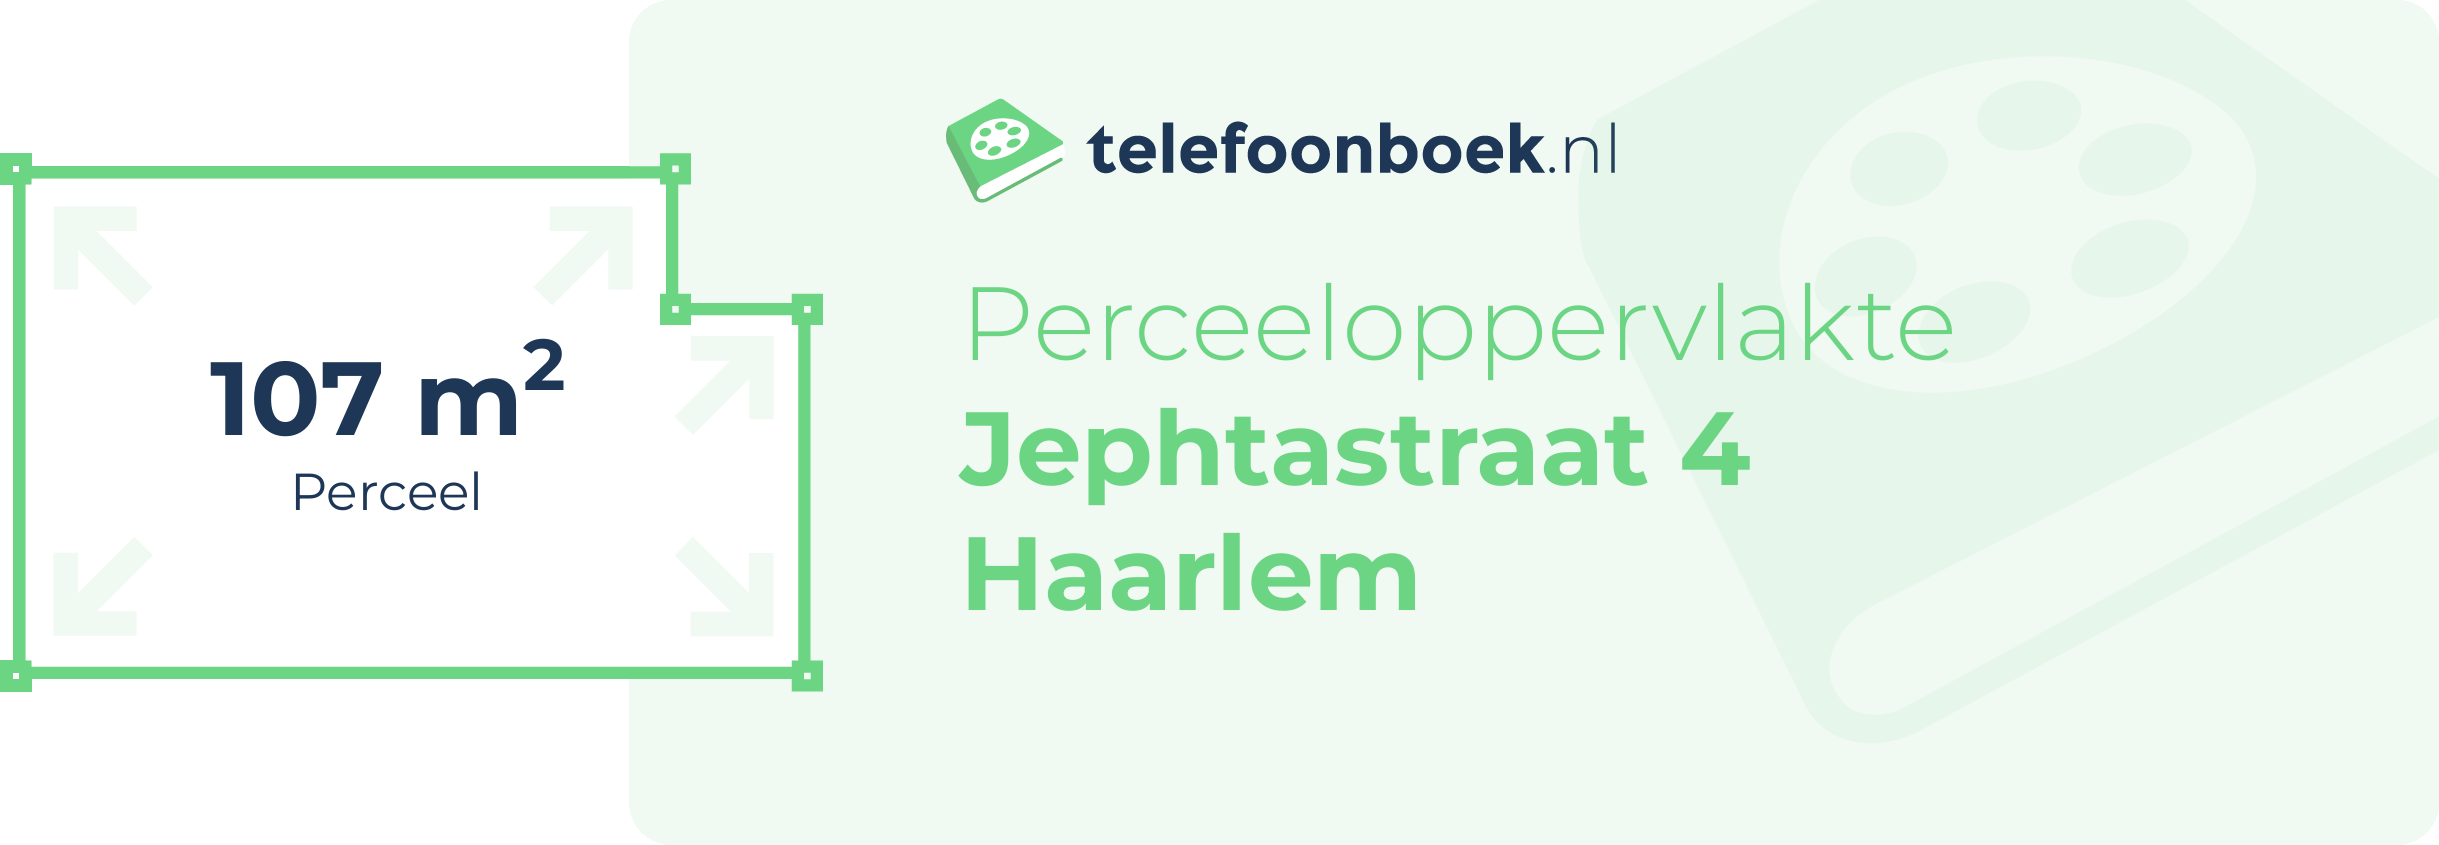 Perceeloppervlakte Jephtastraat 4 Haarlem